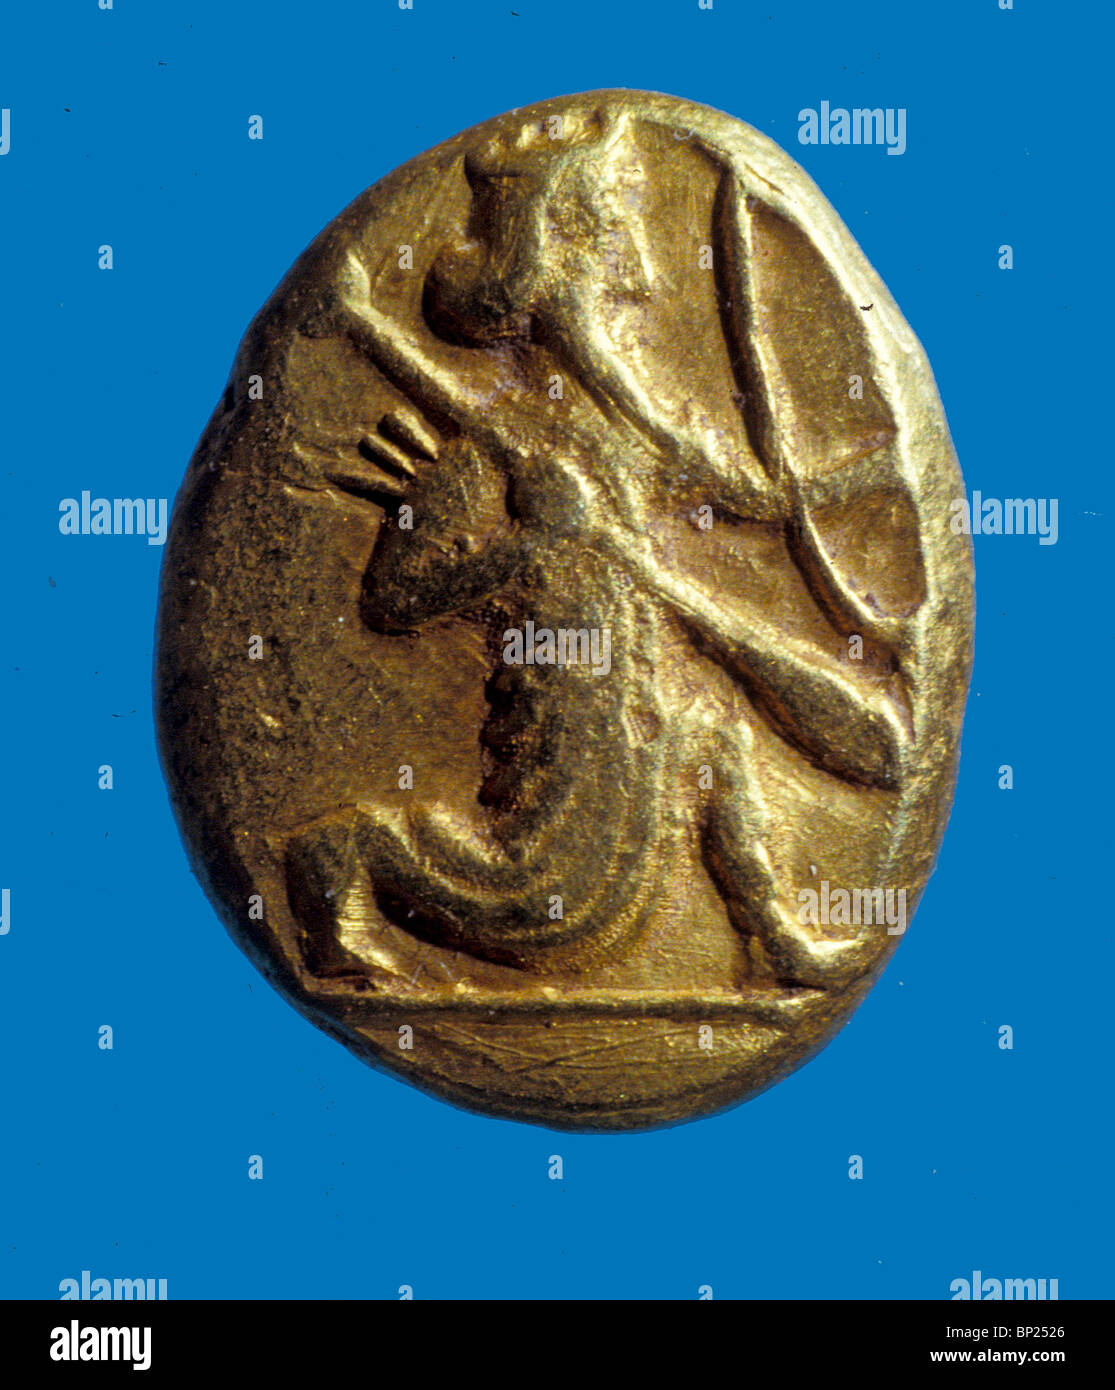 755. SIGLOS OF DARIUS THE GREAT, KING OF PERSIA, 522 - 486 B.C. Stock Photo